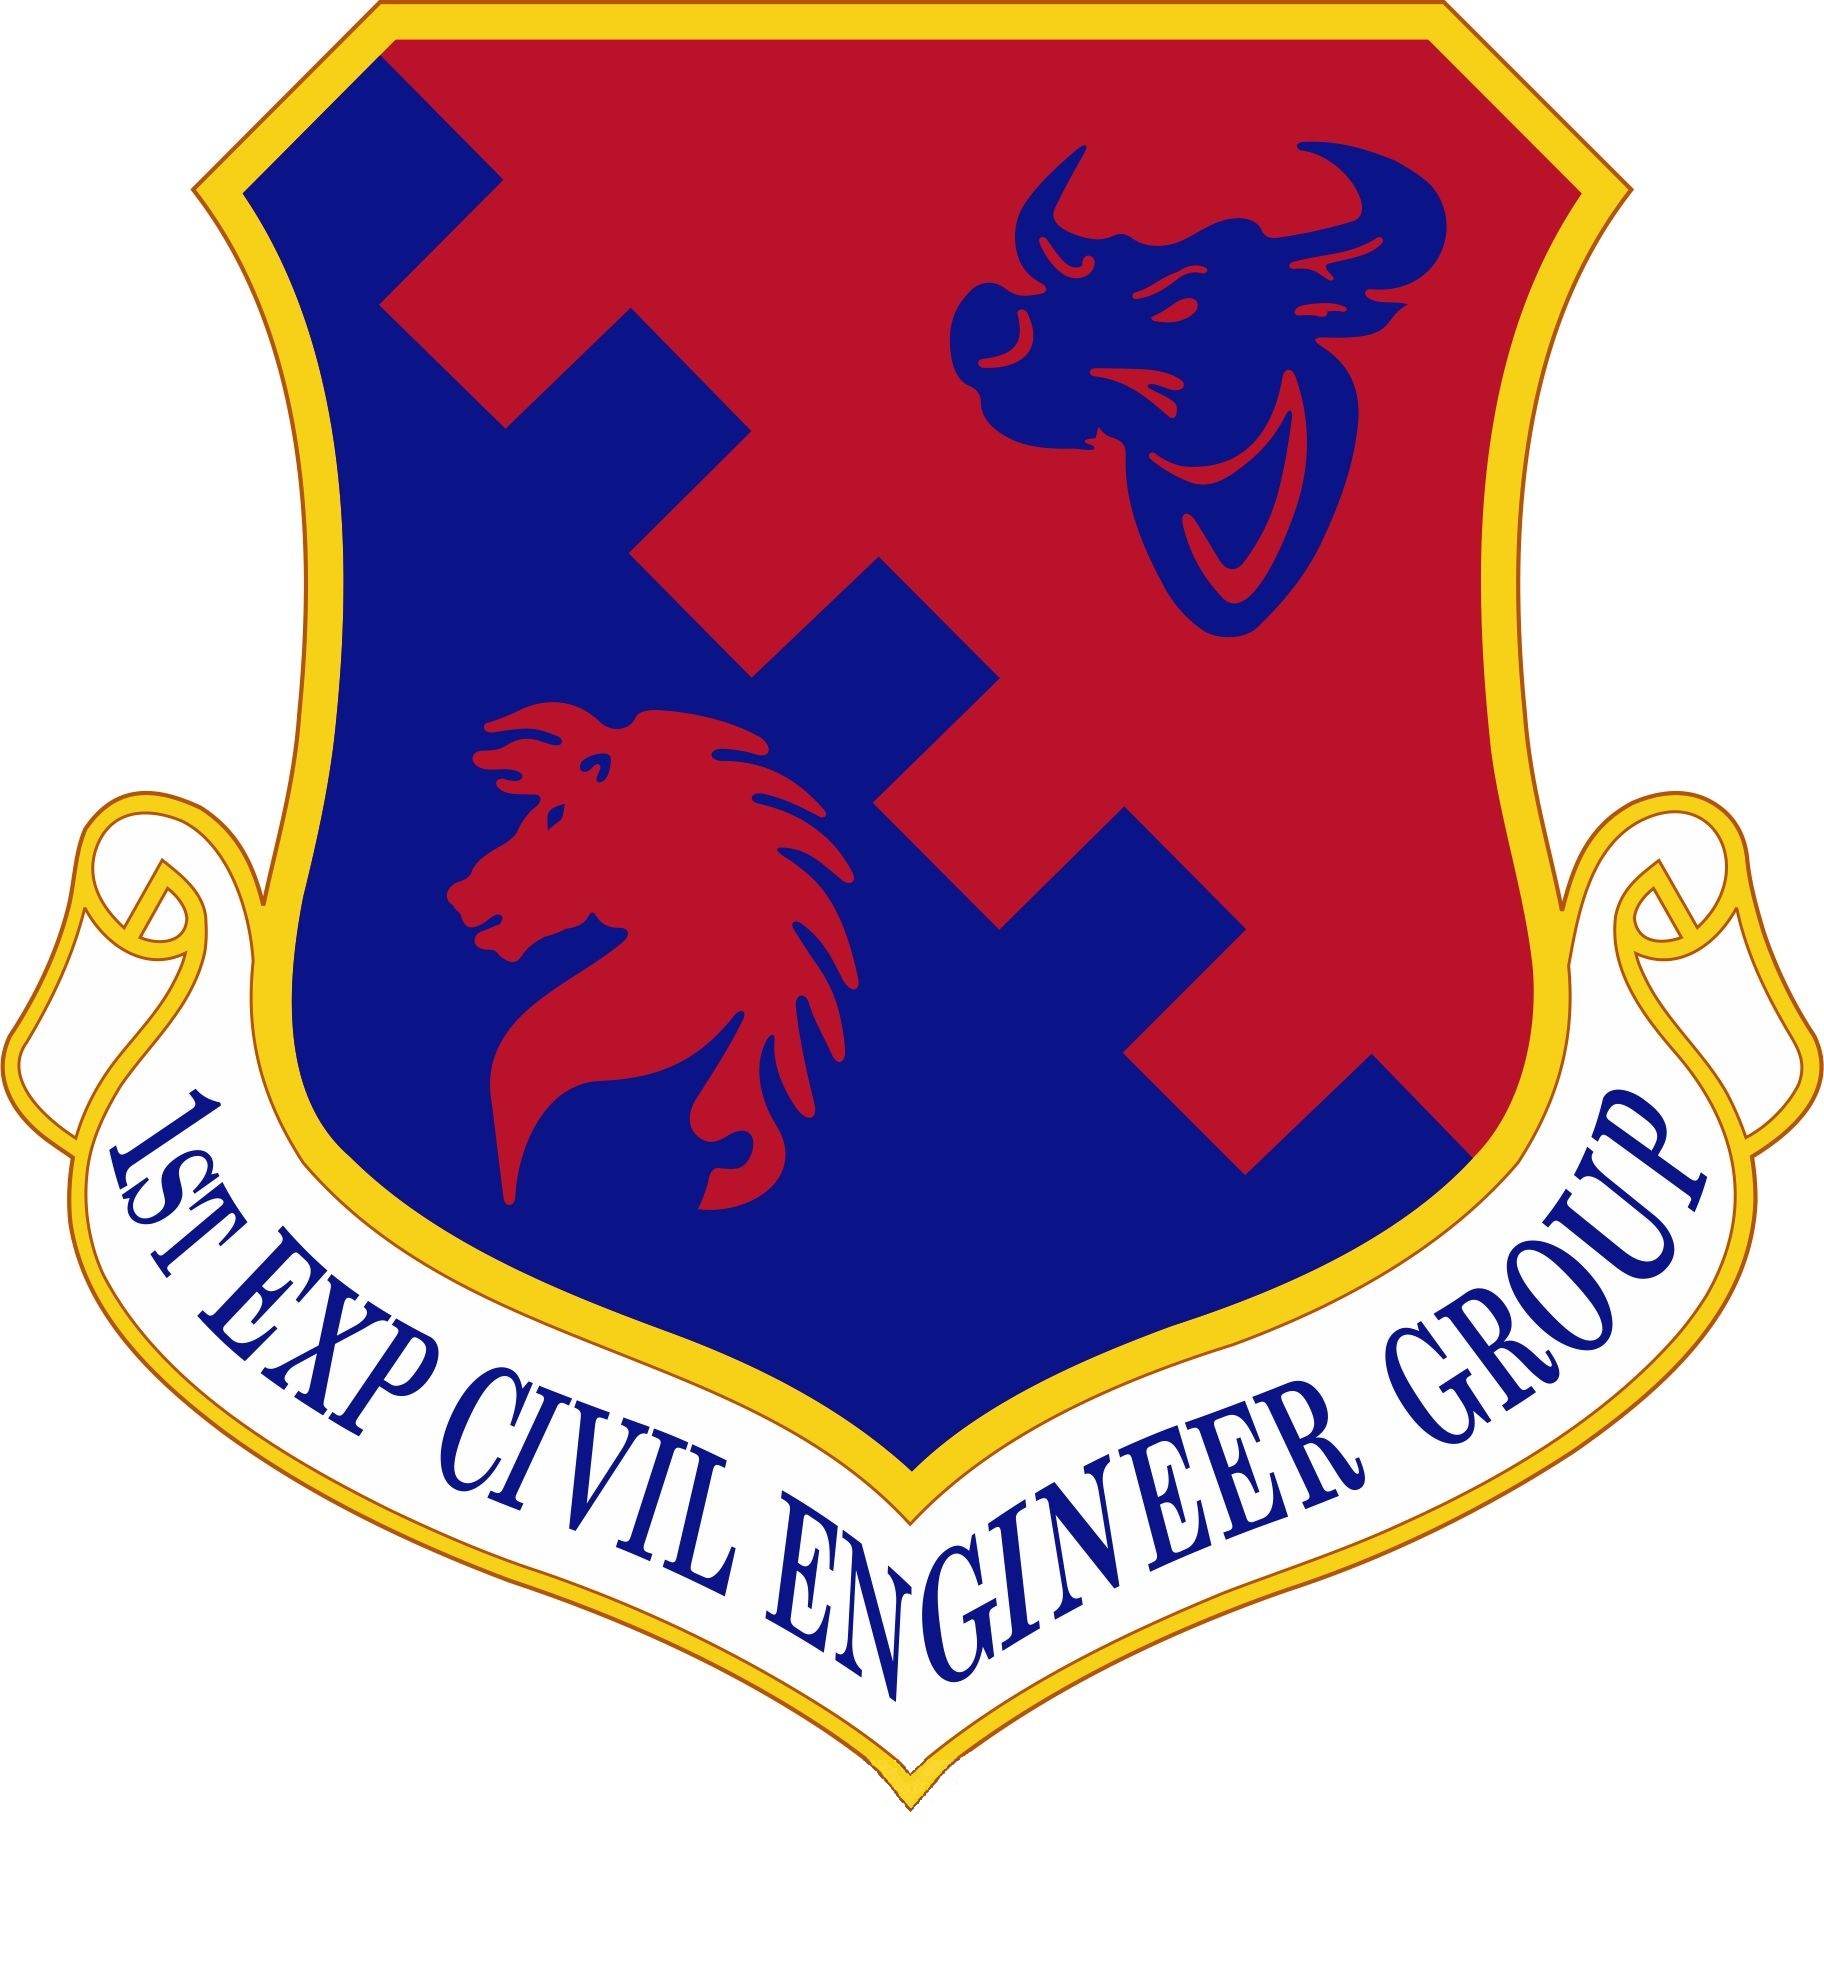 Civil Engineer Group 53